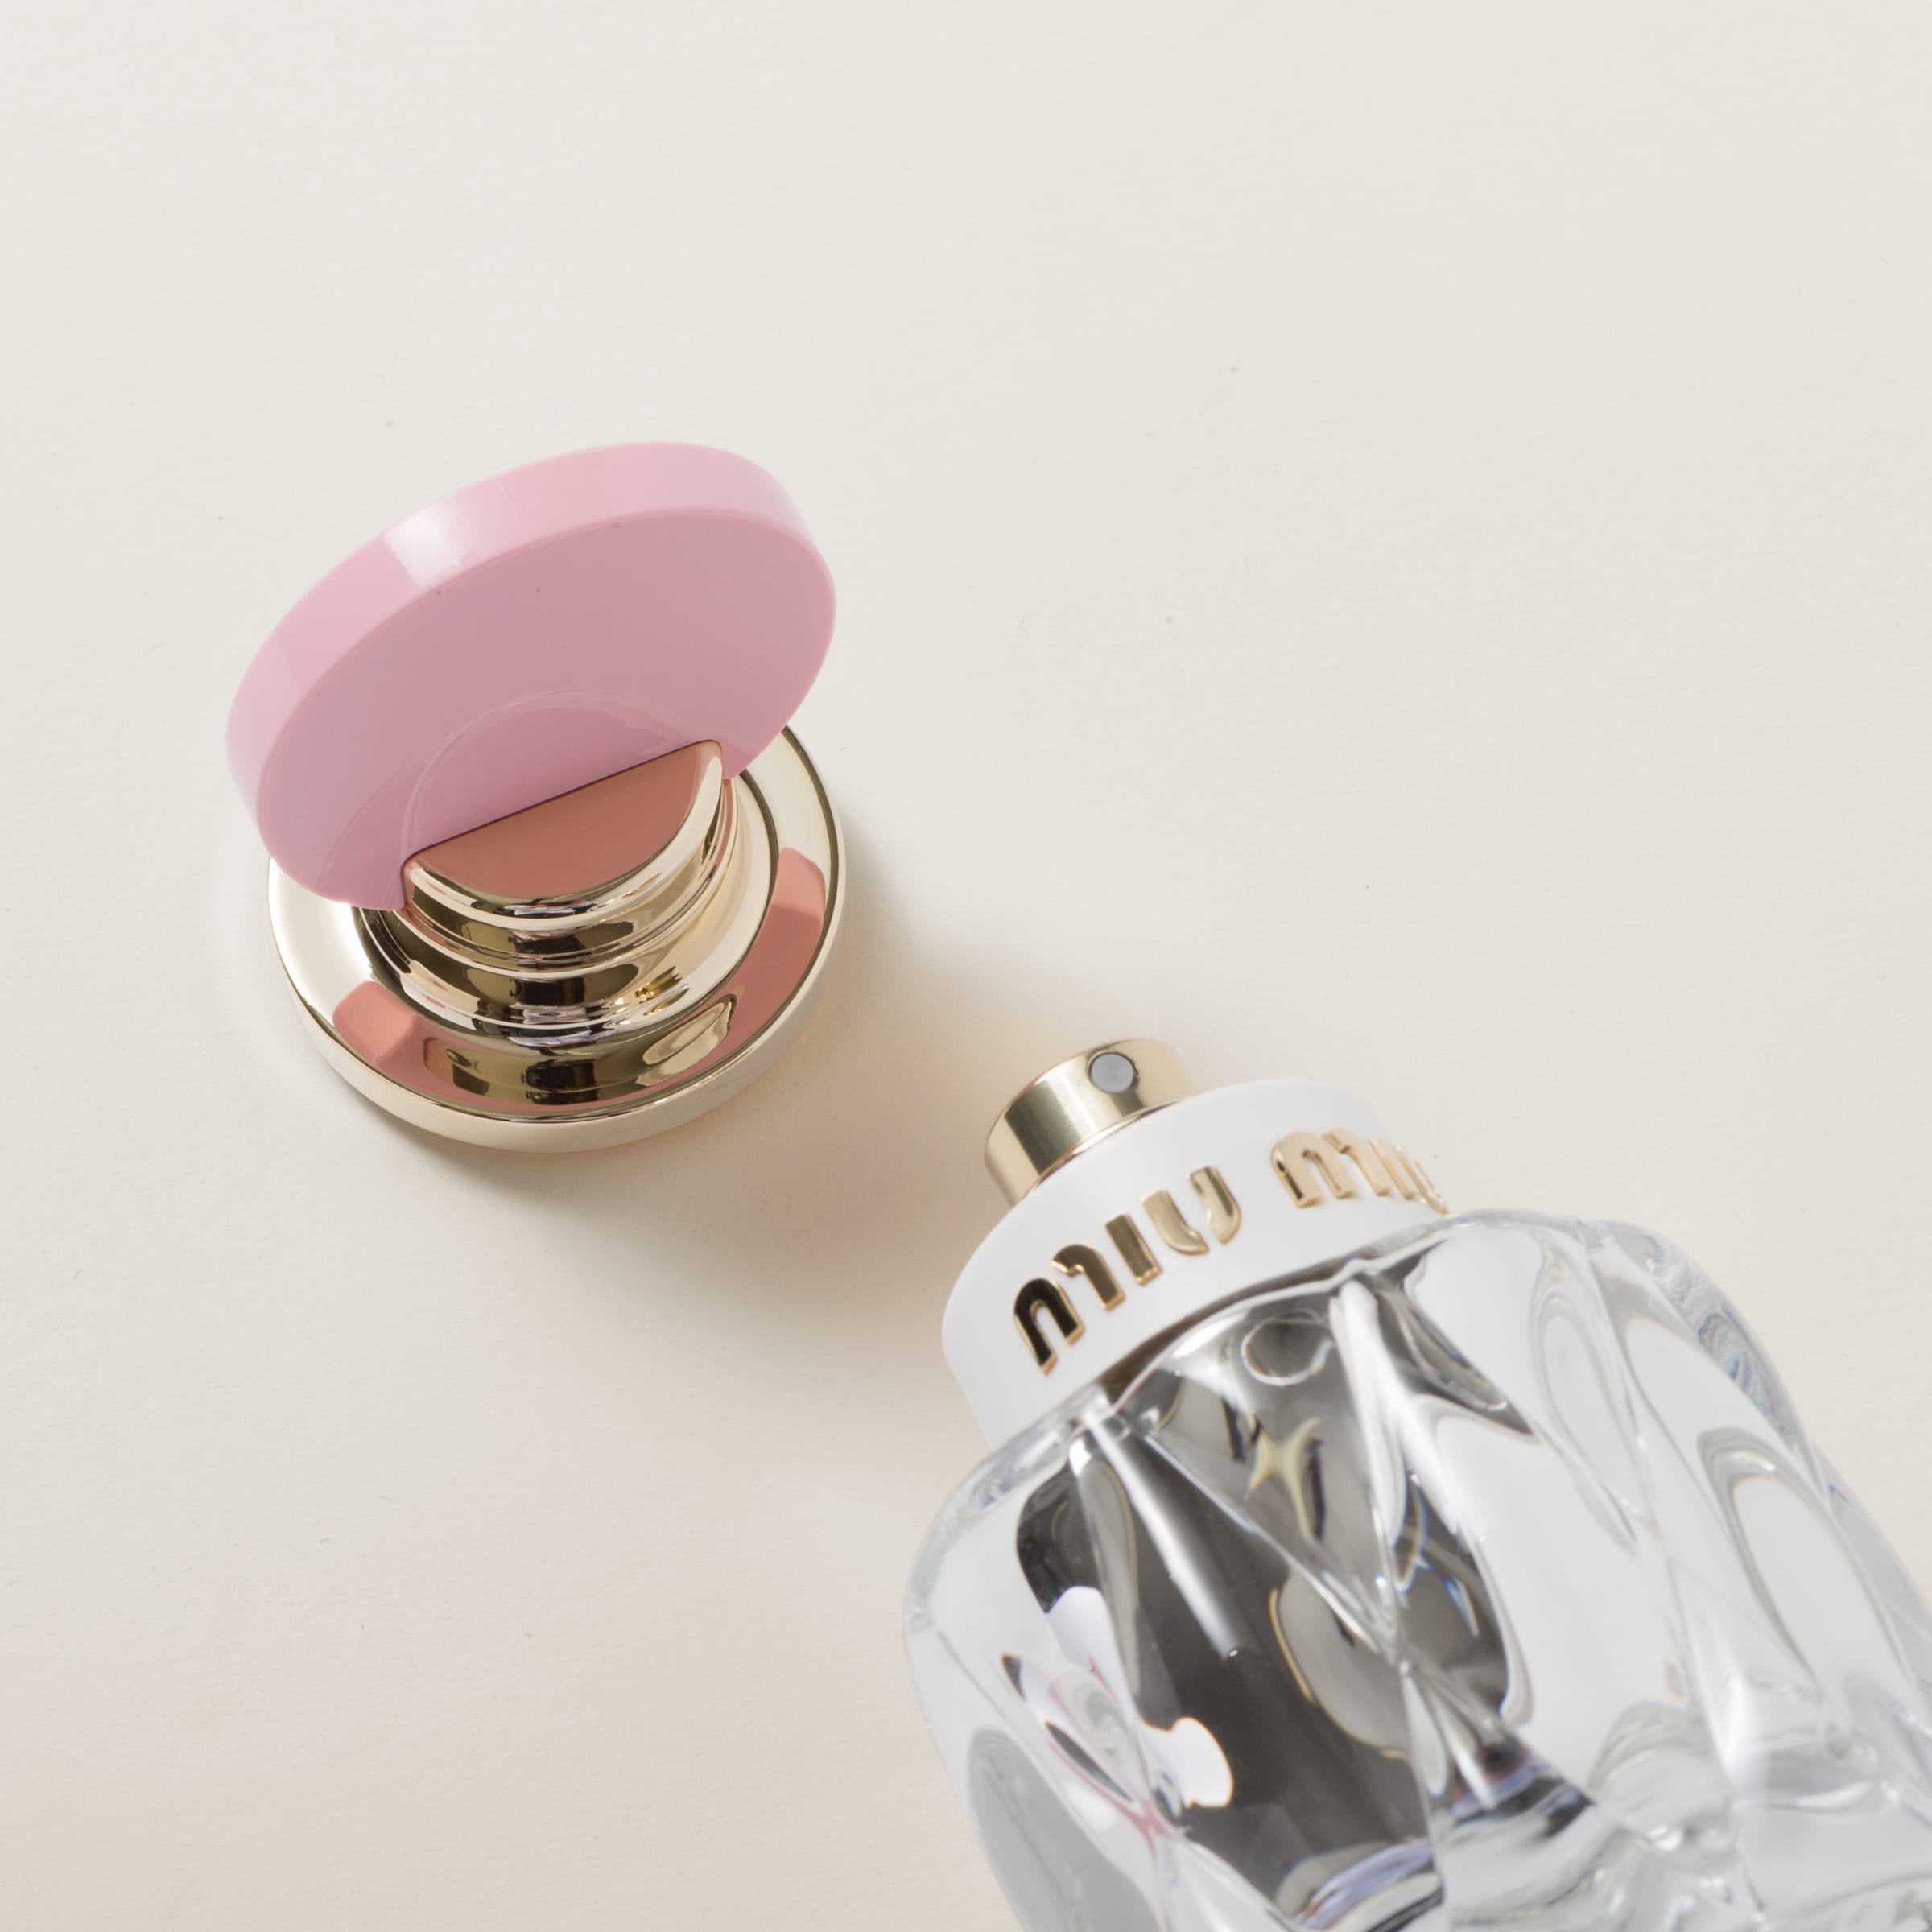 Miu Miu Fleur d'Argent EDP Absolue | My Perfume Shop Australia